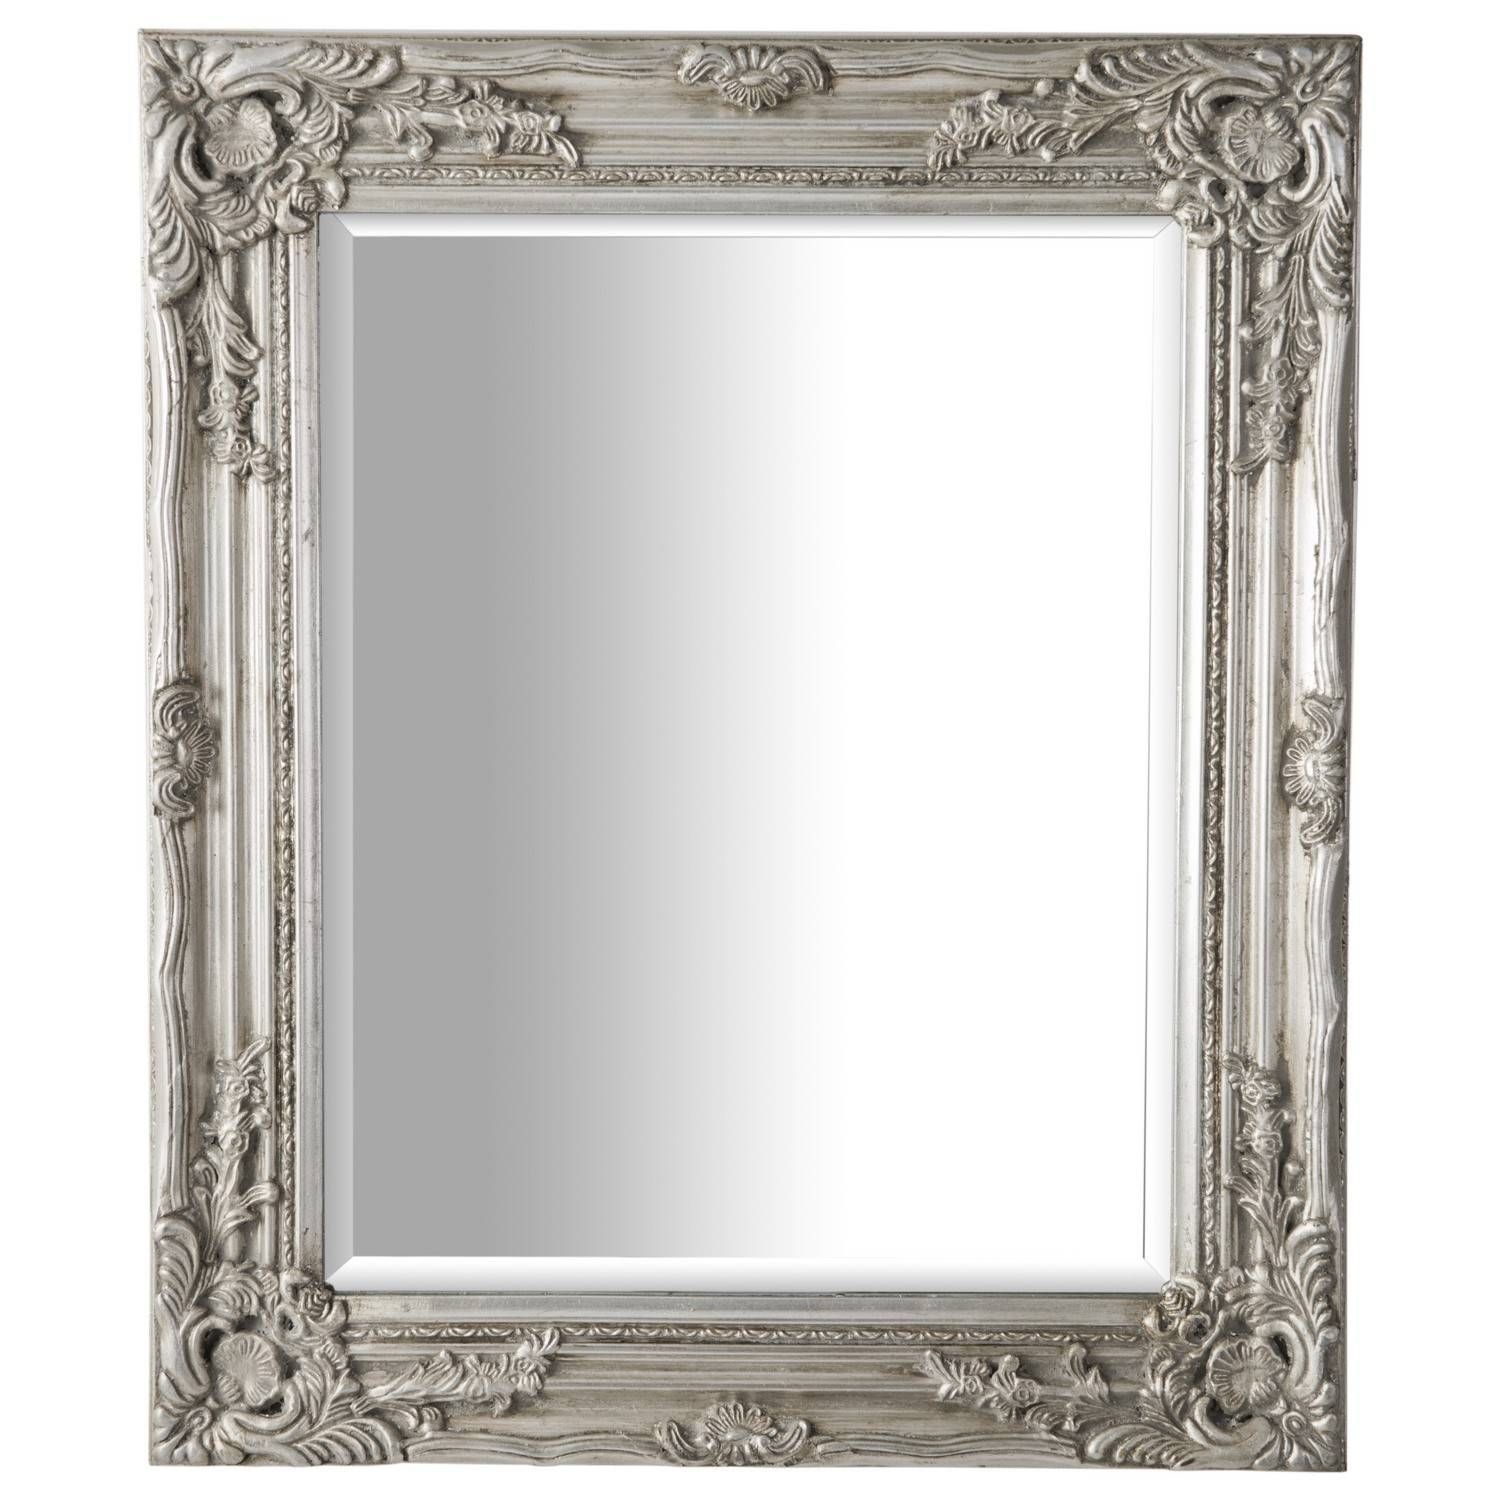 Antique Ornate Mirror Silver Regarding Antique Silver Mirrors (View 7 of 15)